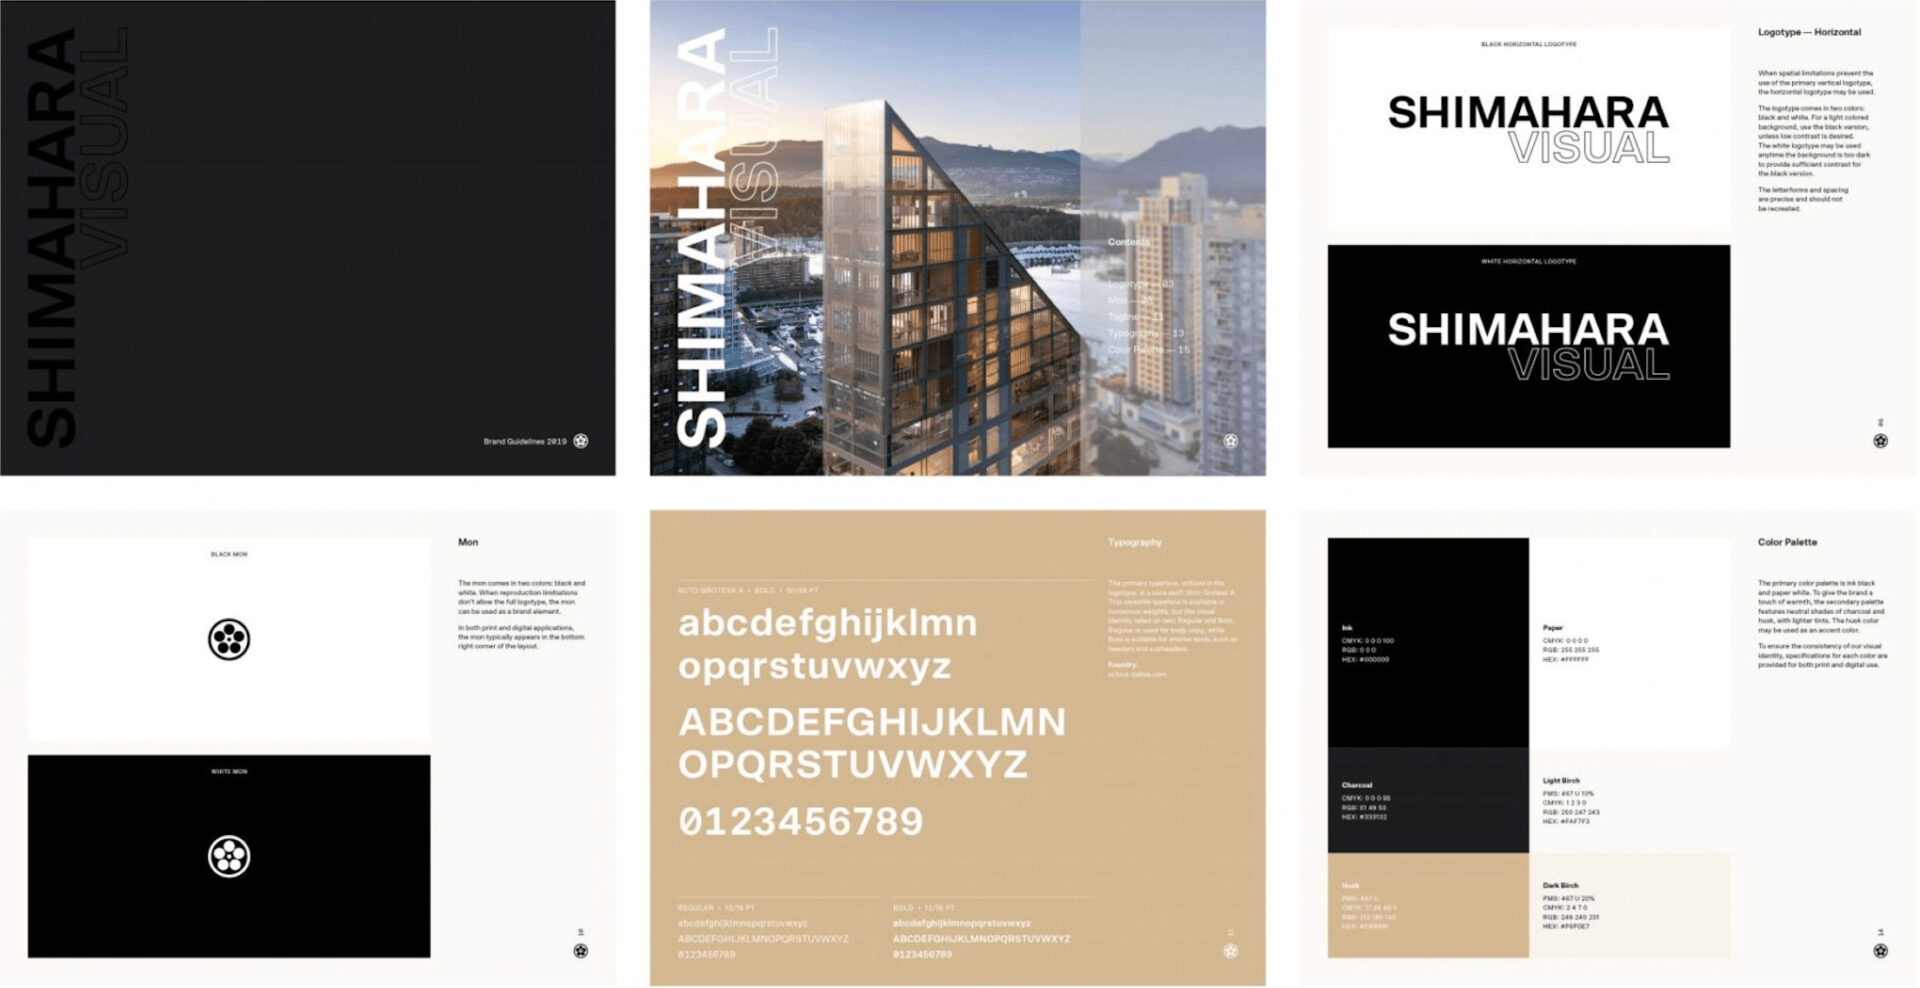 Shimahara Visual brand identity designed by Flux Company